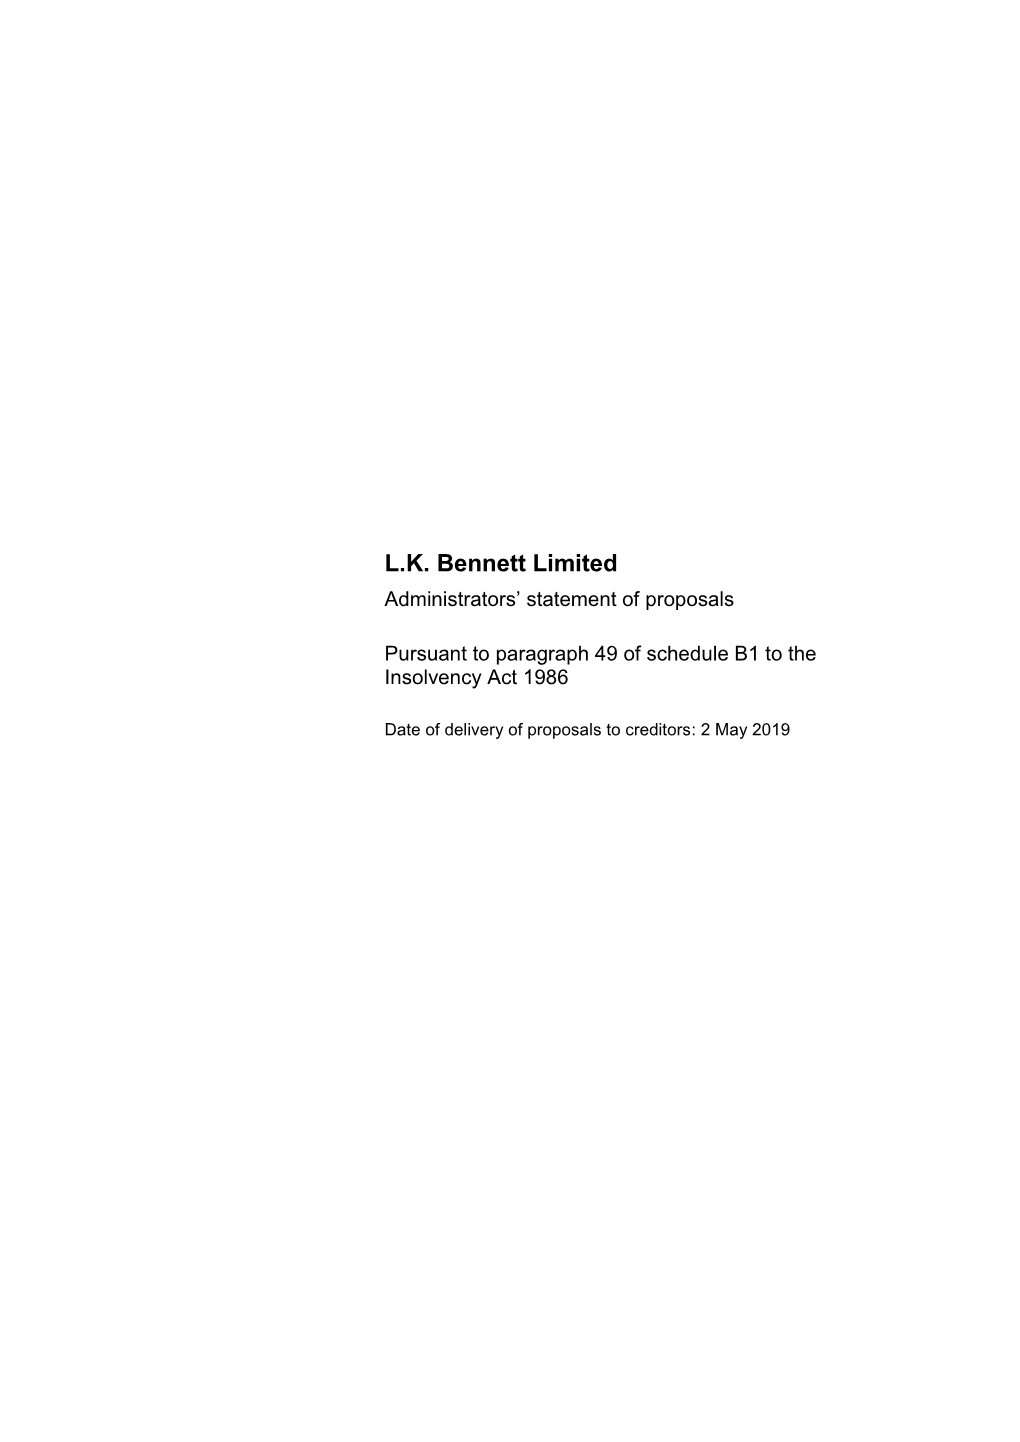 LK Bennett Limited